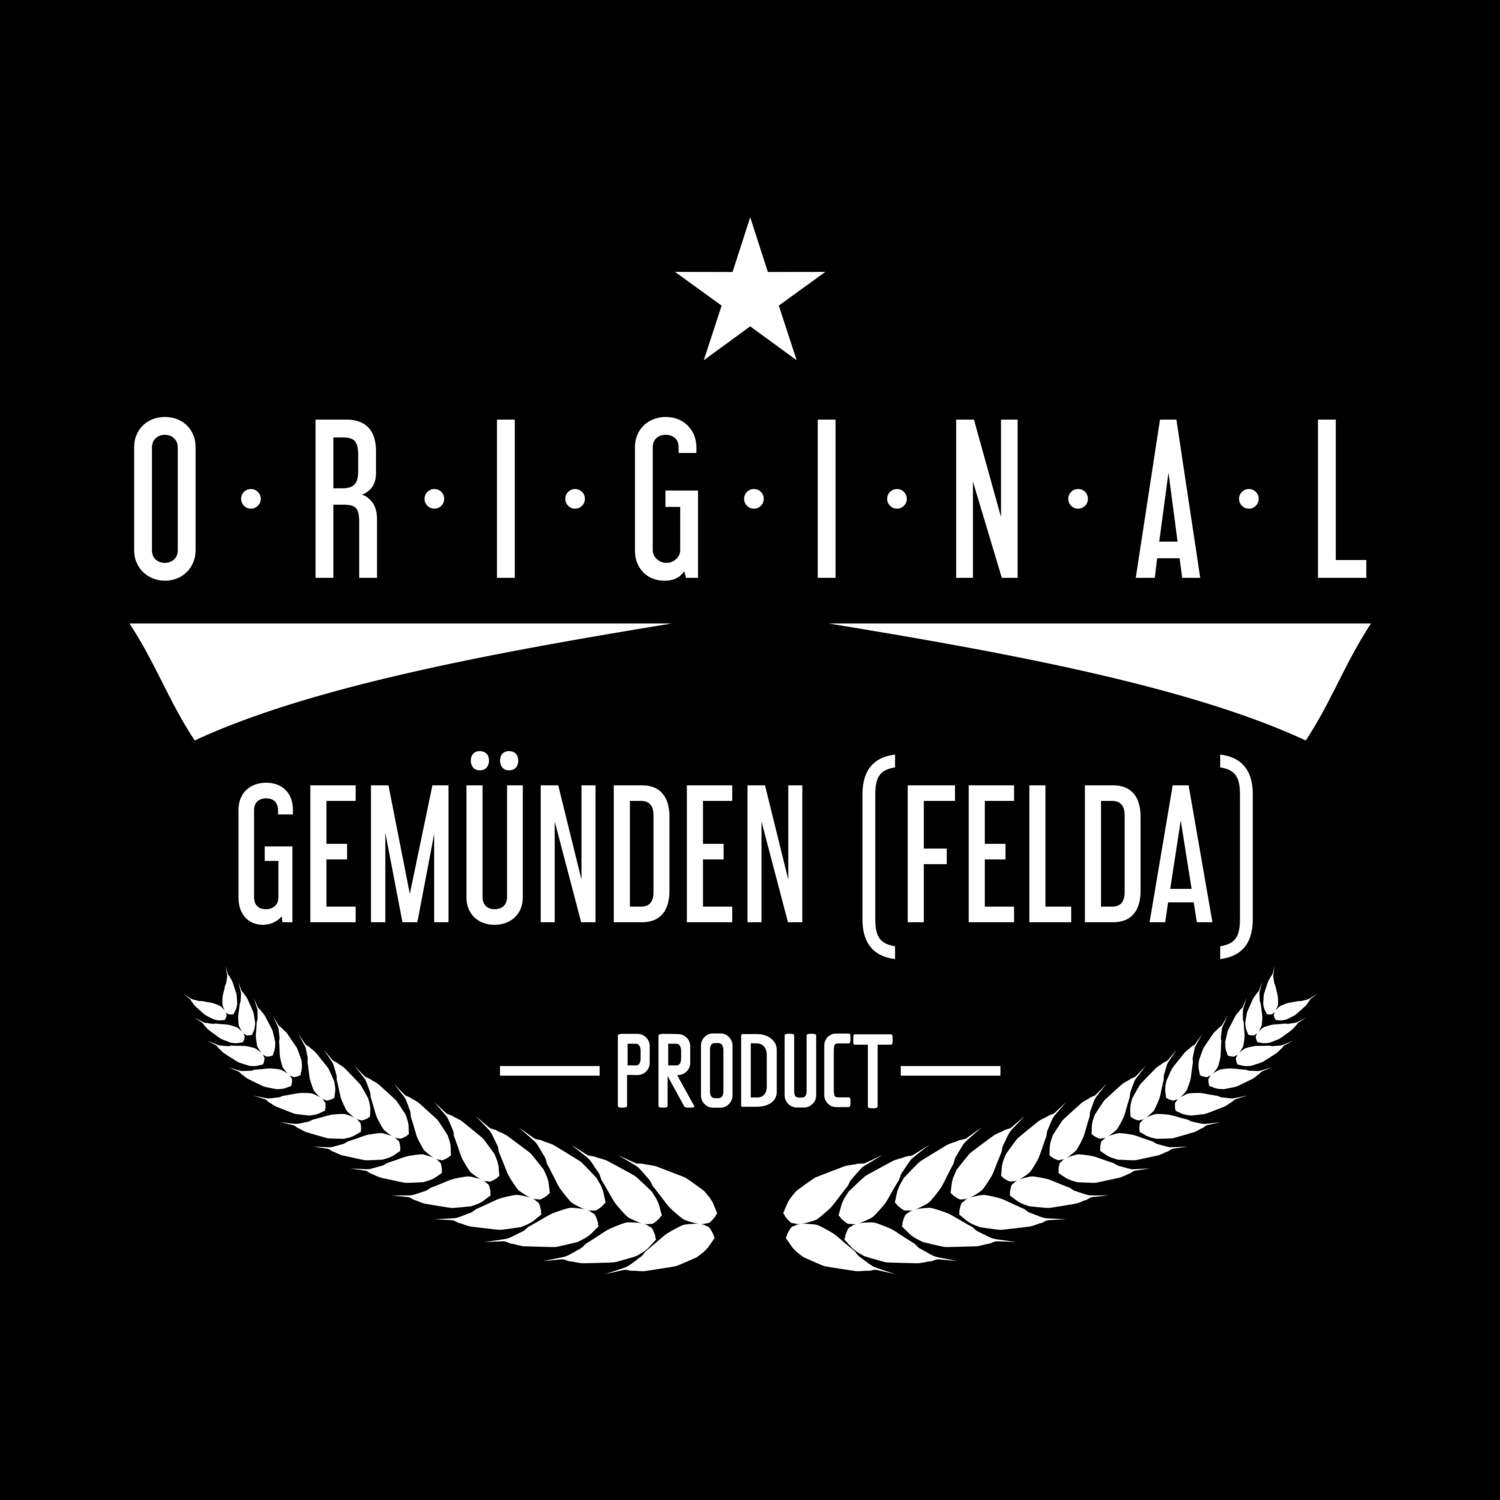 Gemünden (Felda) T-Shirt »Original Product«